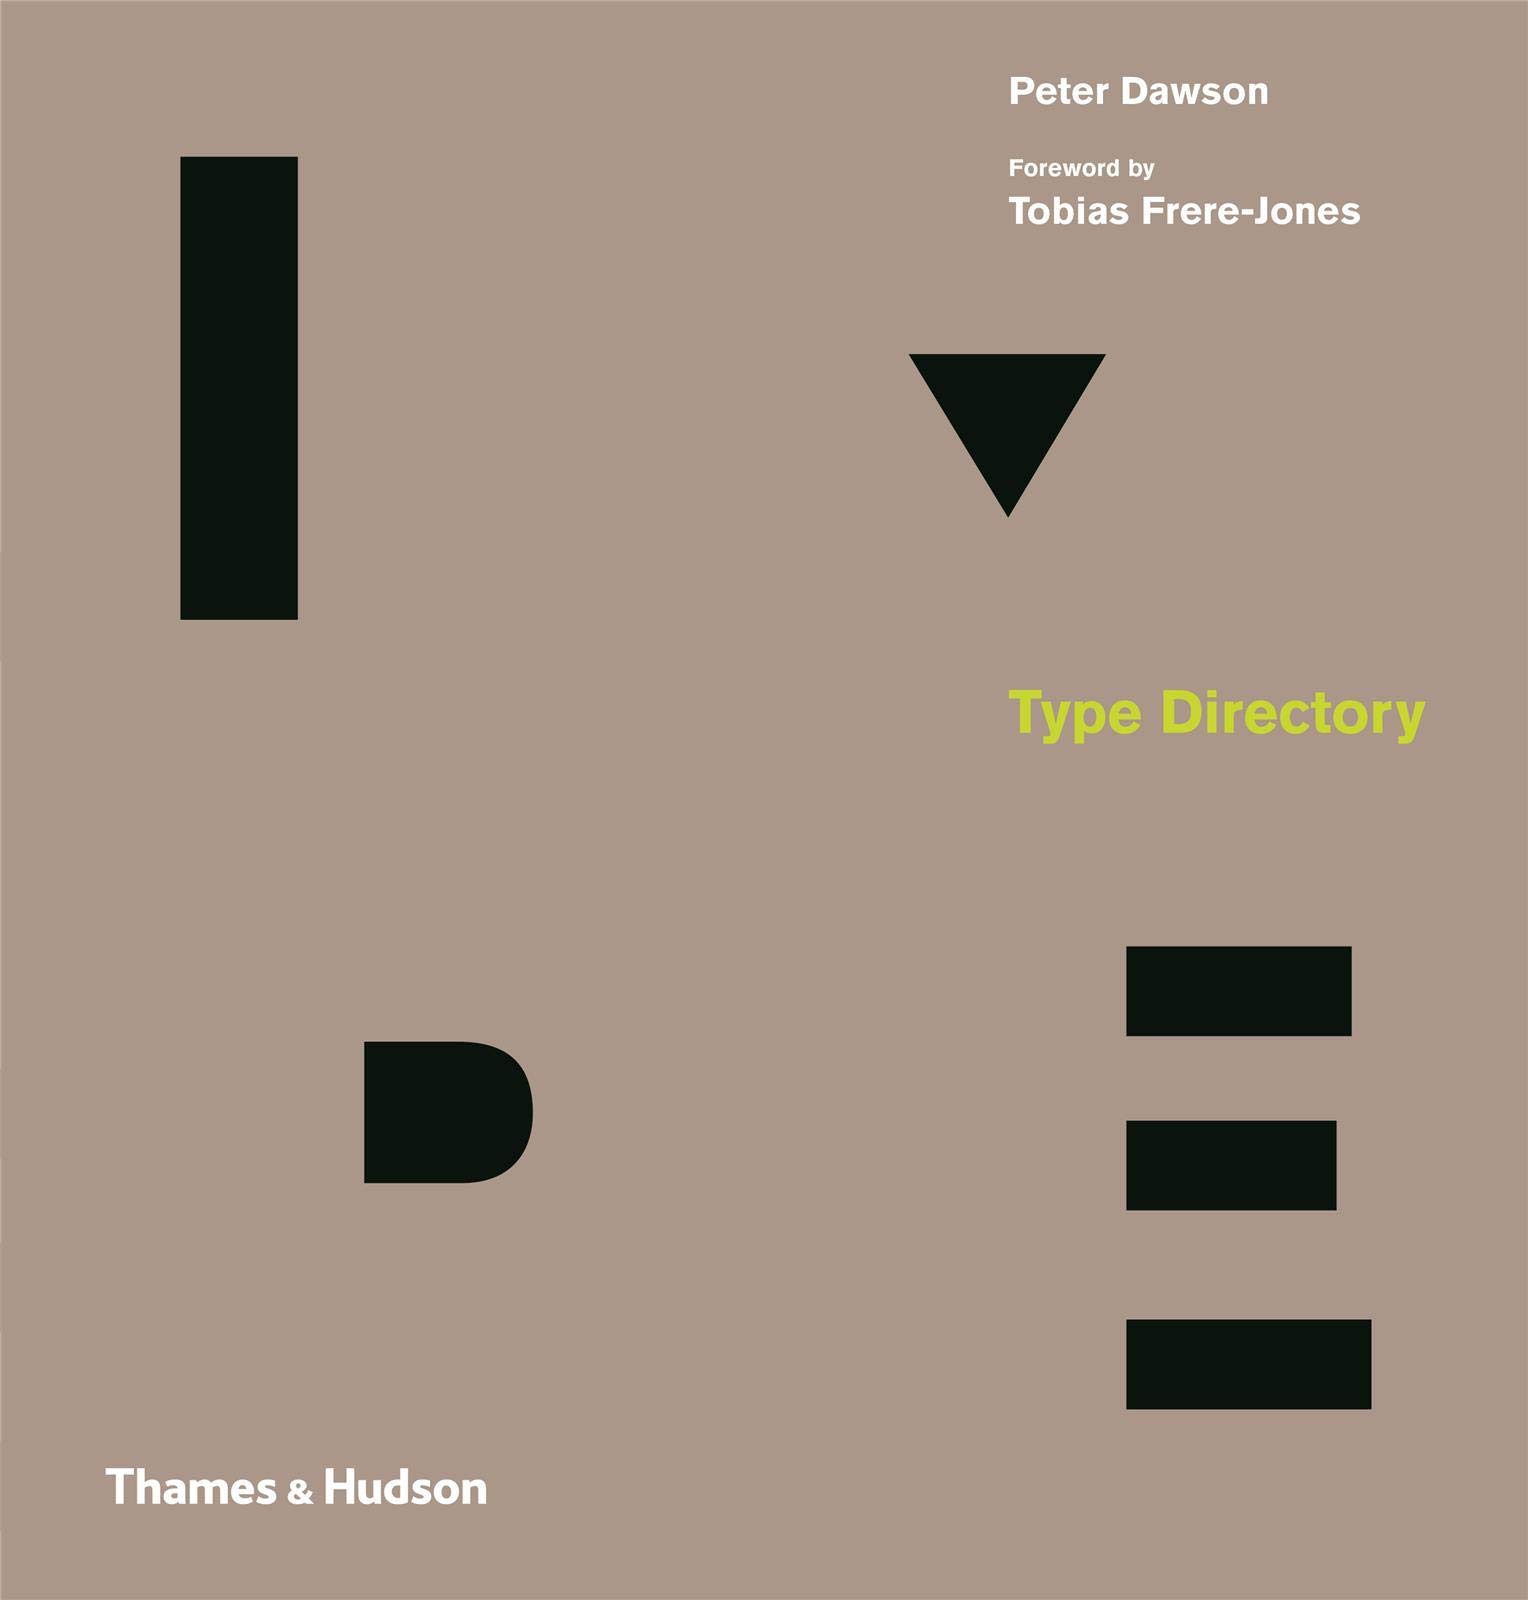 Tobias frere-Jones. Peter Dawson. Type directory